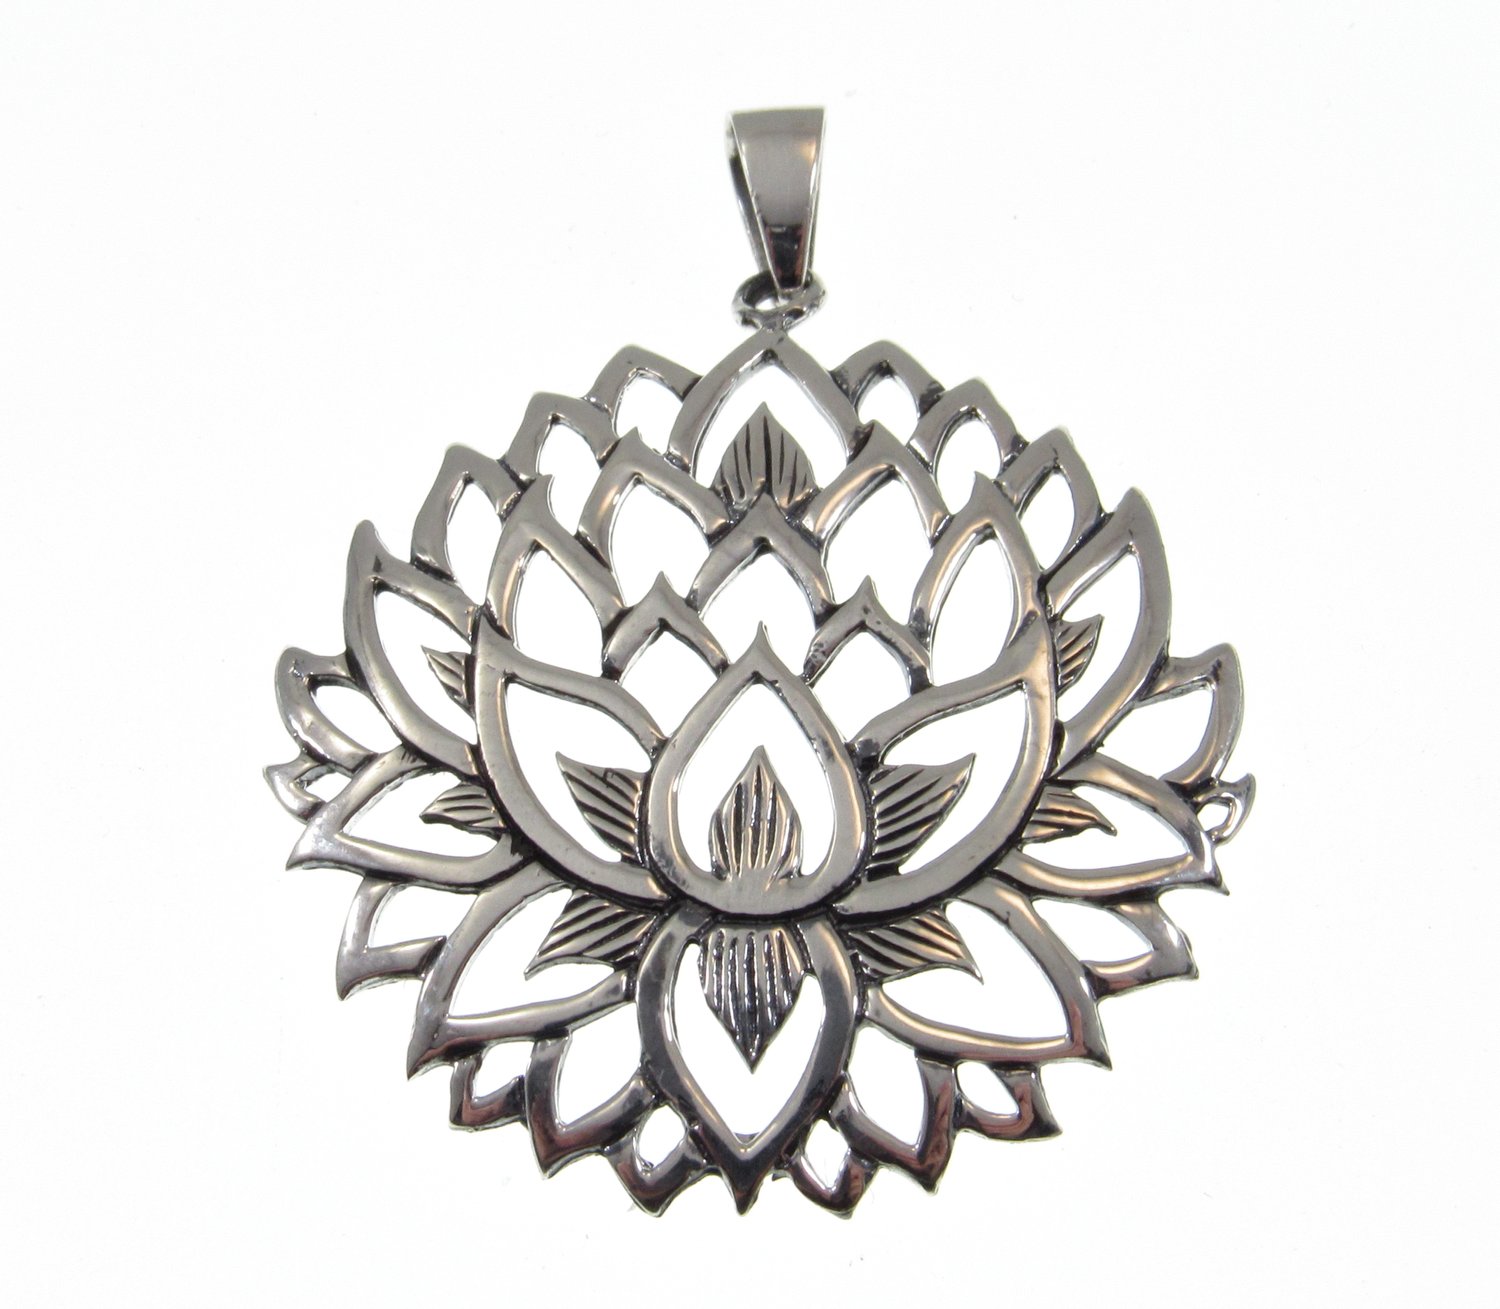 Detailed Lotus Flower Open Blossom Pendant in Sterling Silver 7627 